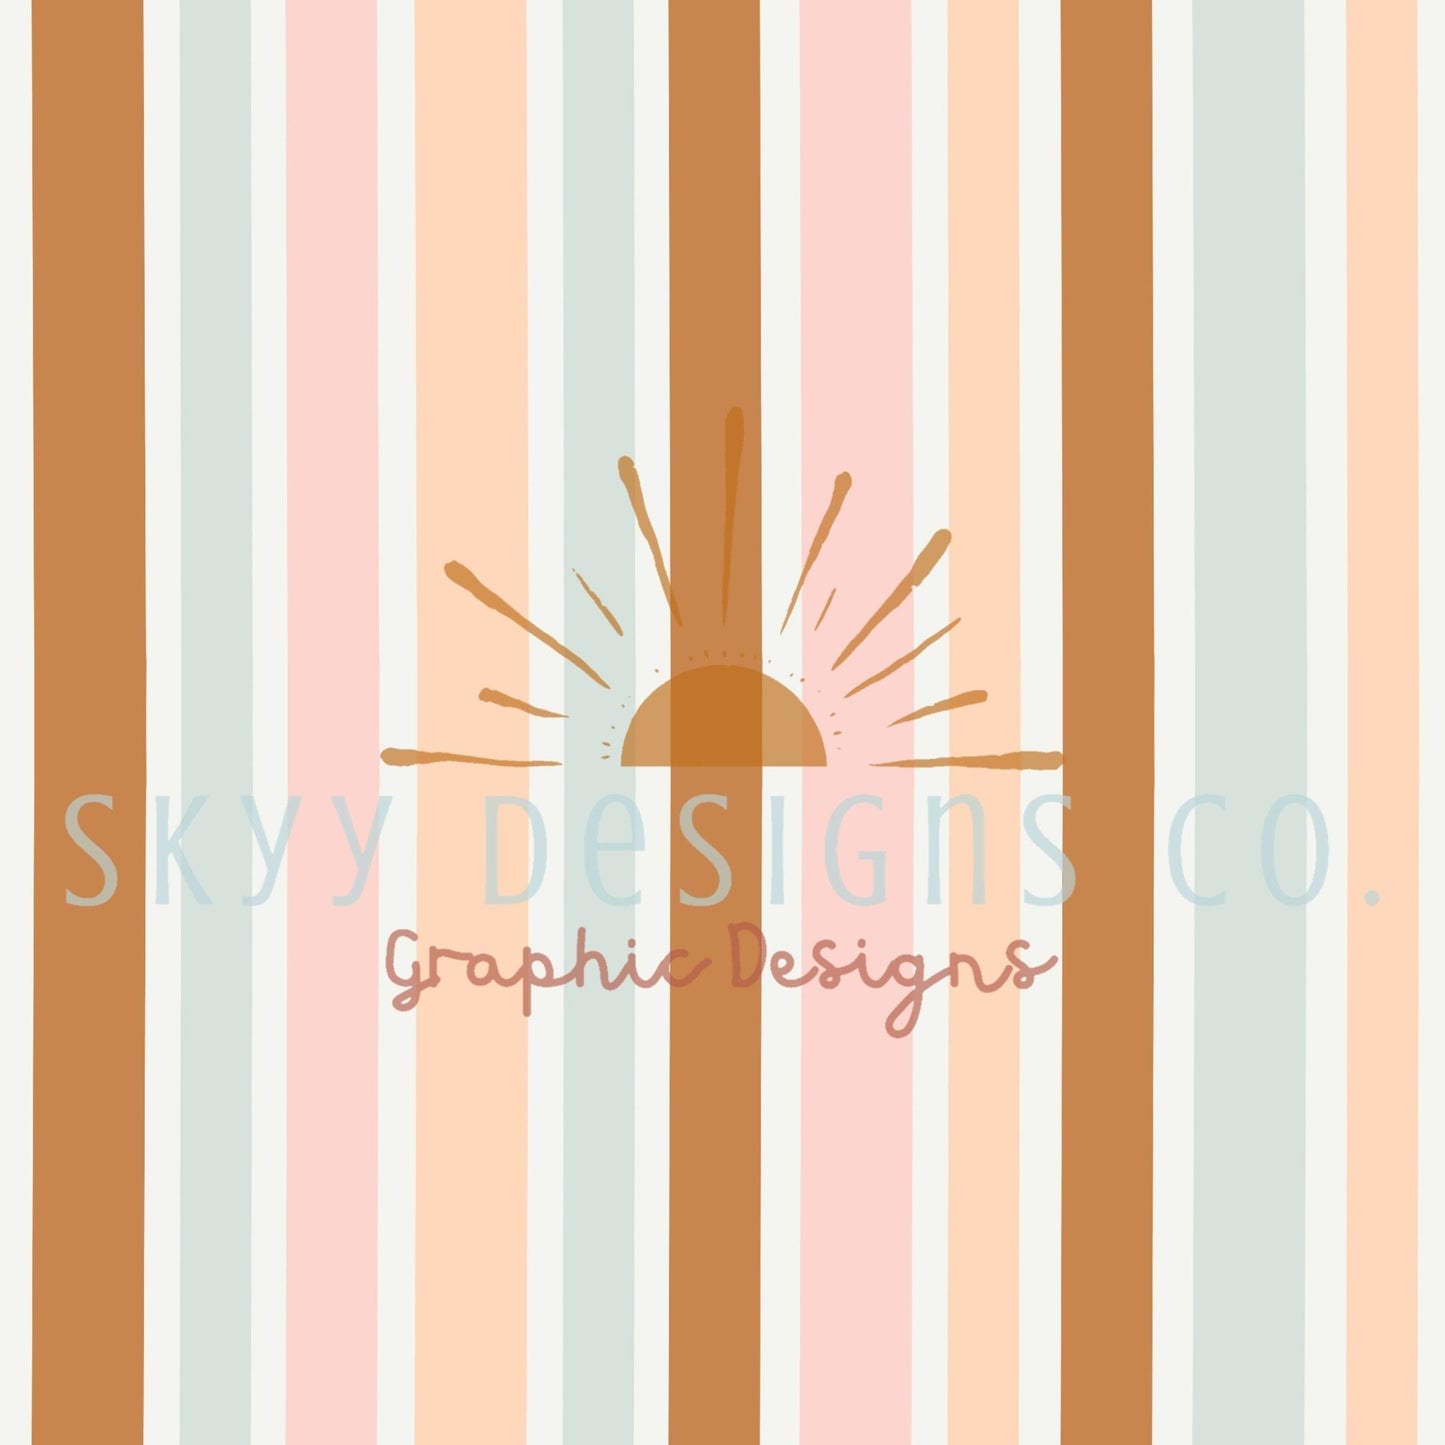 Seashells seamless pattern - SkyyDesignsCo